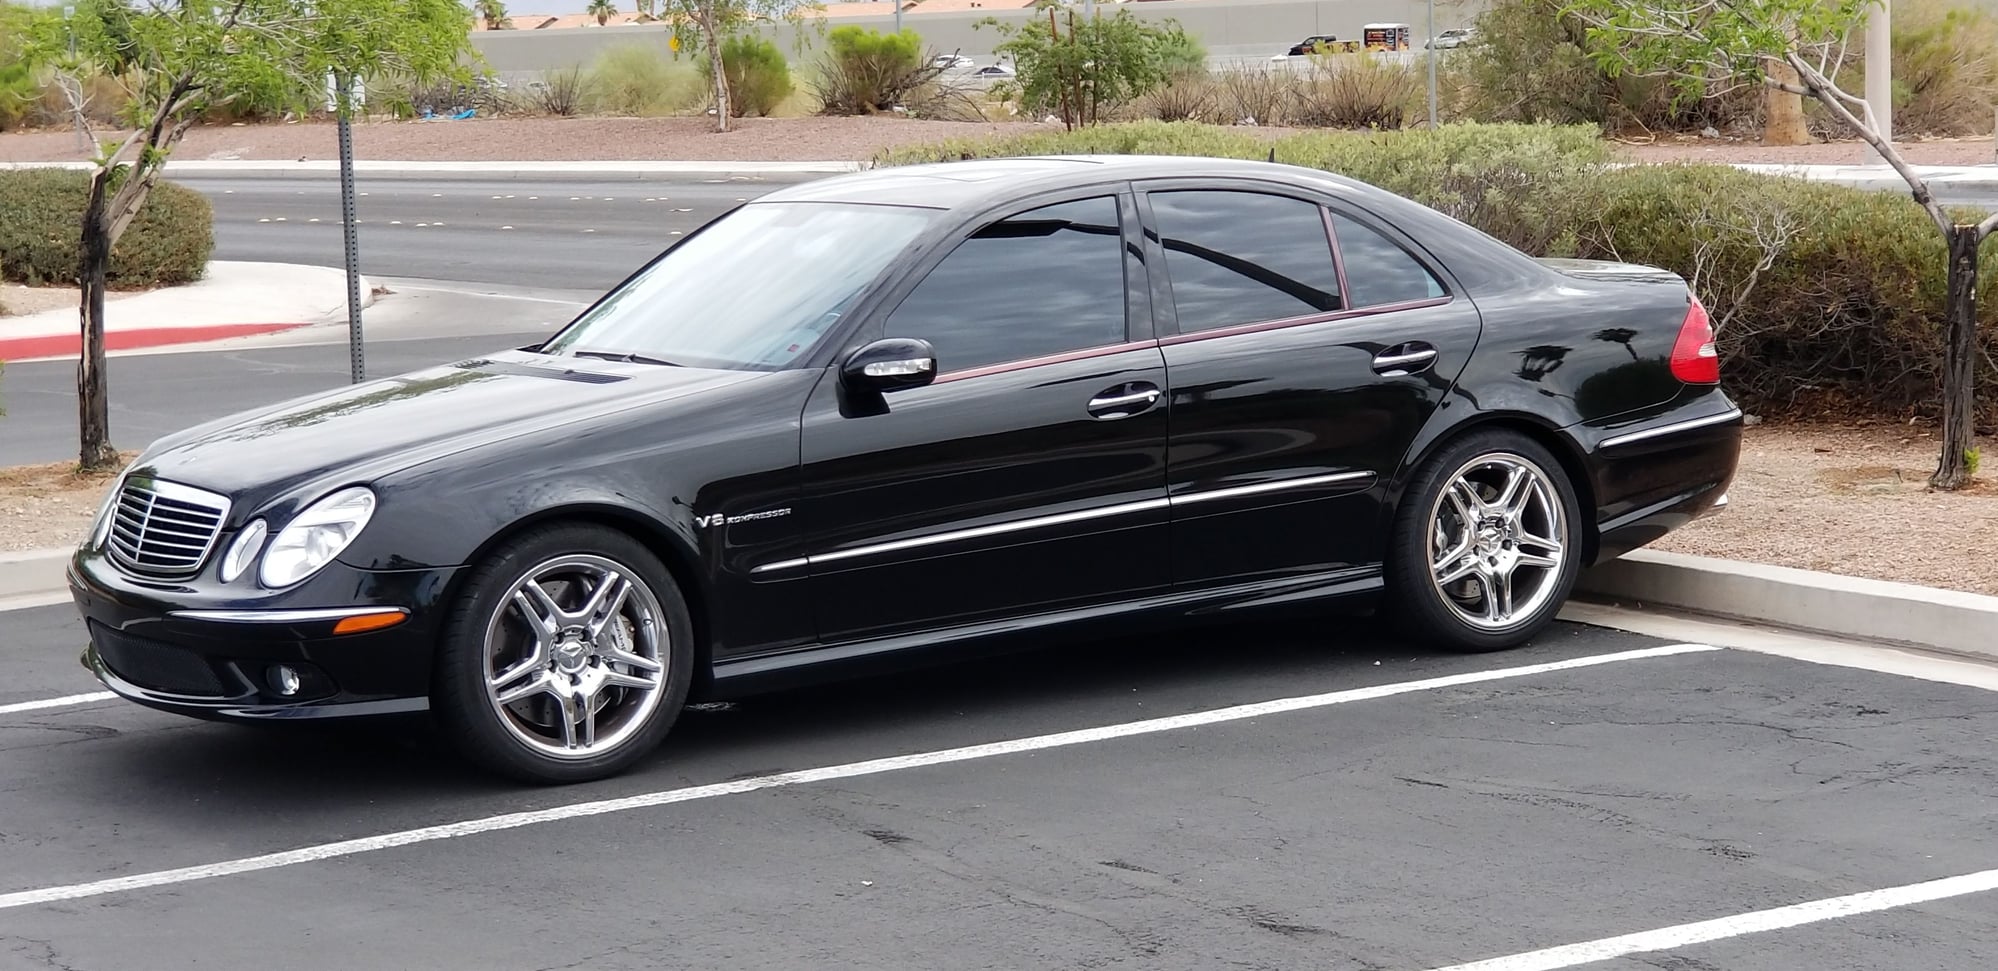 2004 Mercedes-Benz E55 AMG - Black 04 E55 AMG With 62K - Used - VIN WDBUF76JX4A548482 - 62,900 Miles - 8 cyl - 2WD - Automatic - Sedan - Black - Las Vegas, NV 89148, United States